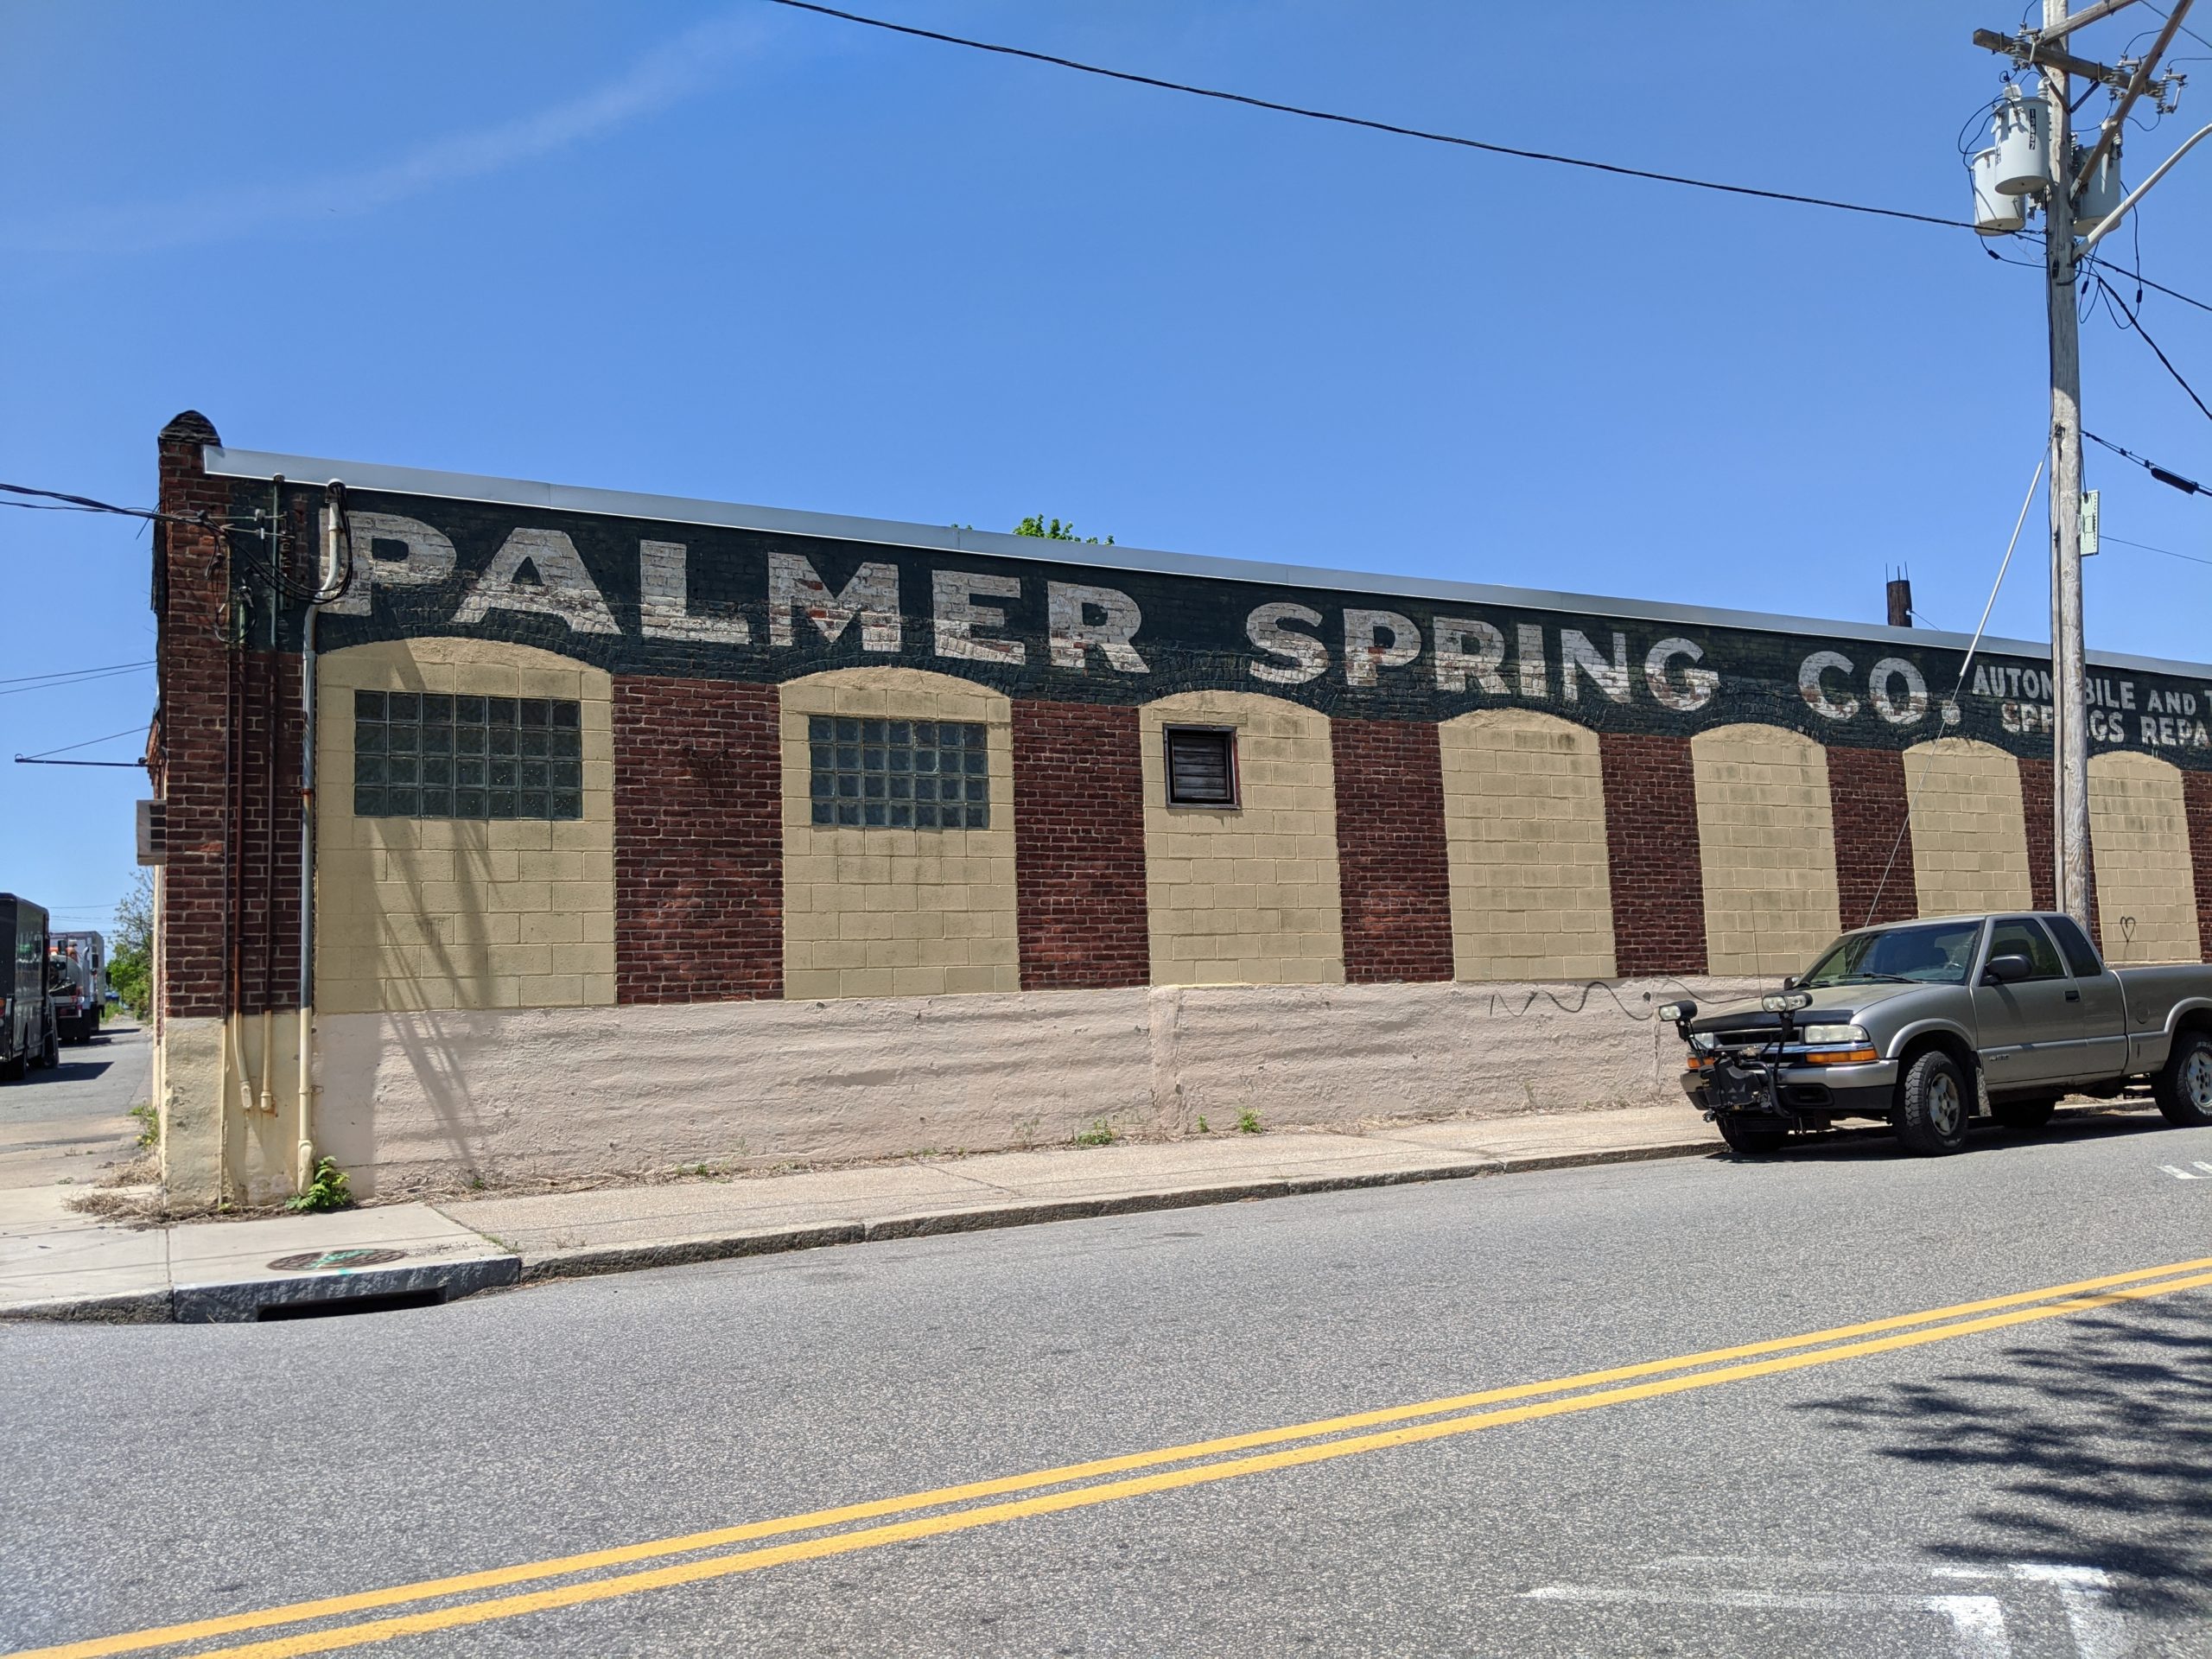 Palmer Spring Co.